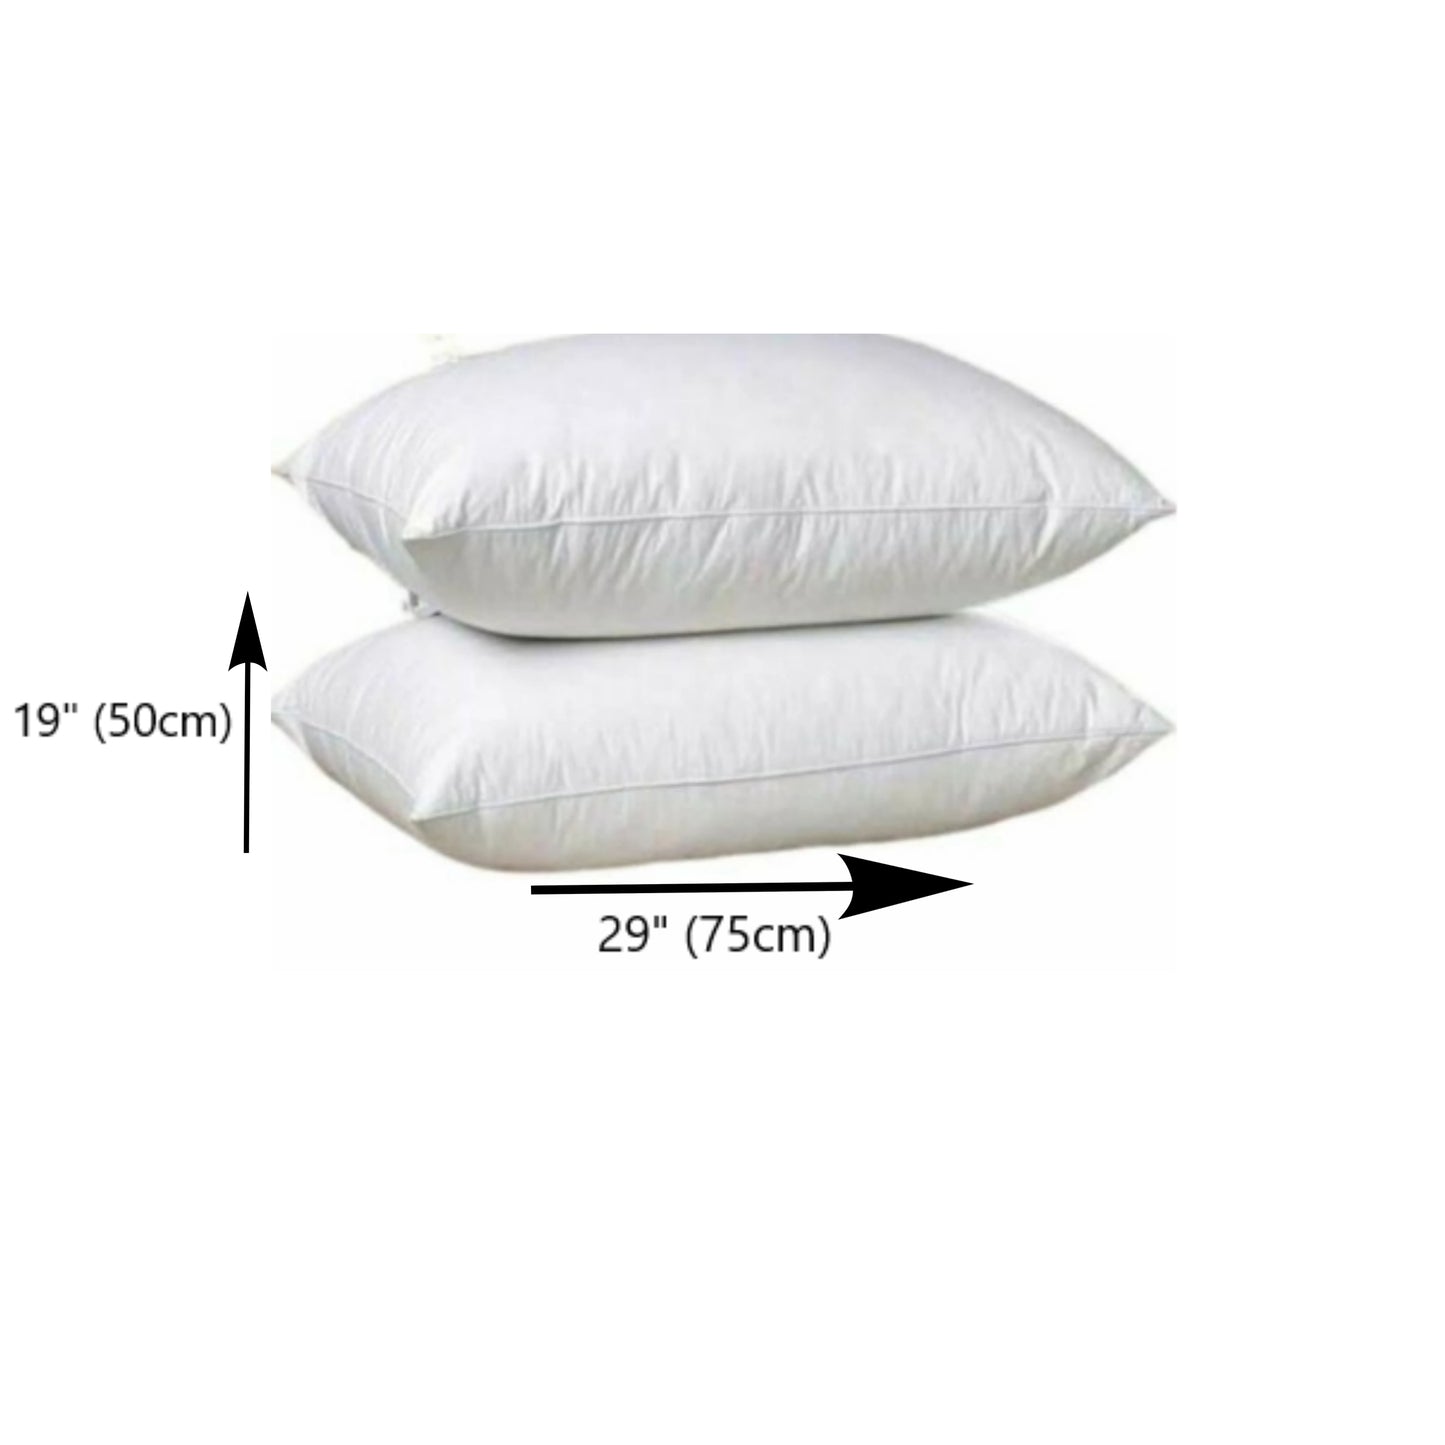 Extra Filled Bounce Back Hollow Fibre Pillows Hotel Quailty Plump Pillows